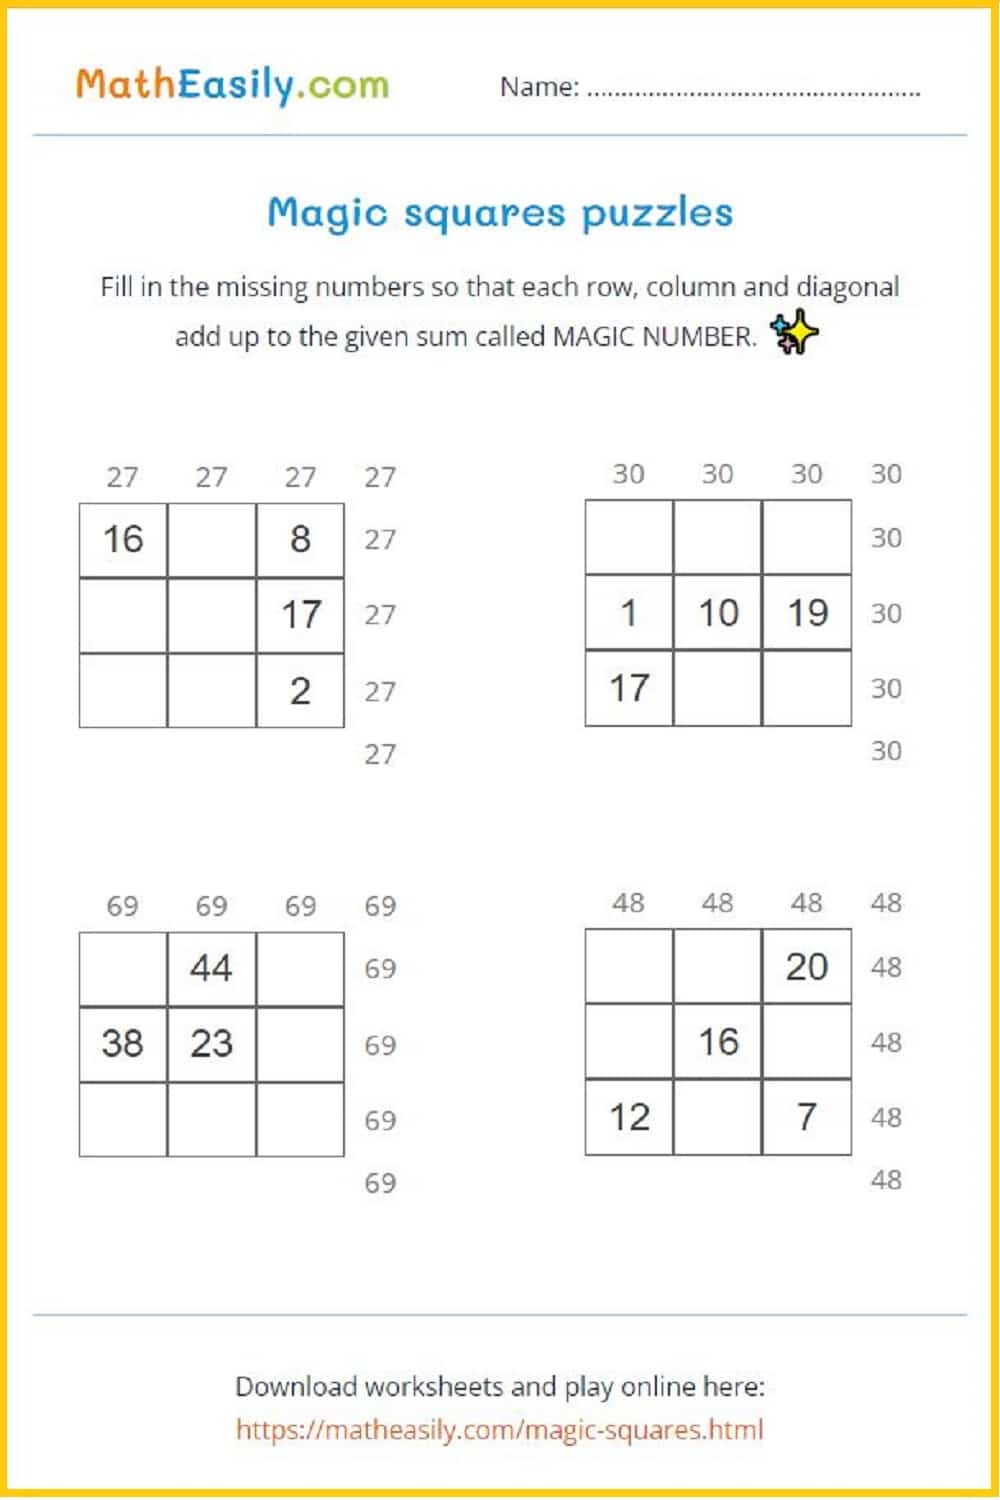 problem solving puzzles printable maths puzzles pdf. printable math puzzles PDF. solve math puzzle online.
kids maths puzzles for kids. mathematical puzzles. Printable math puzzle games.